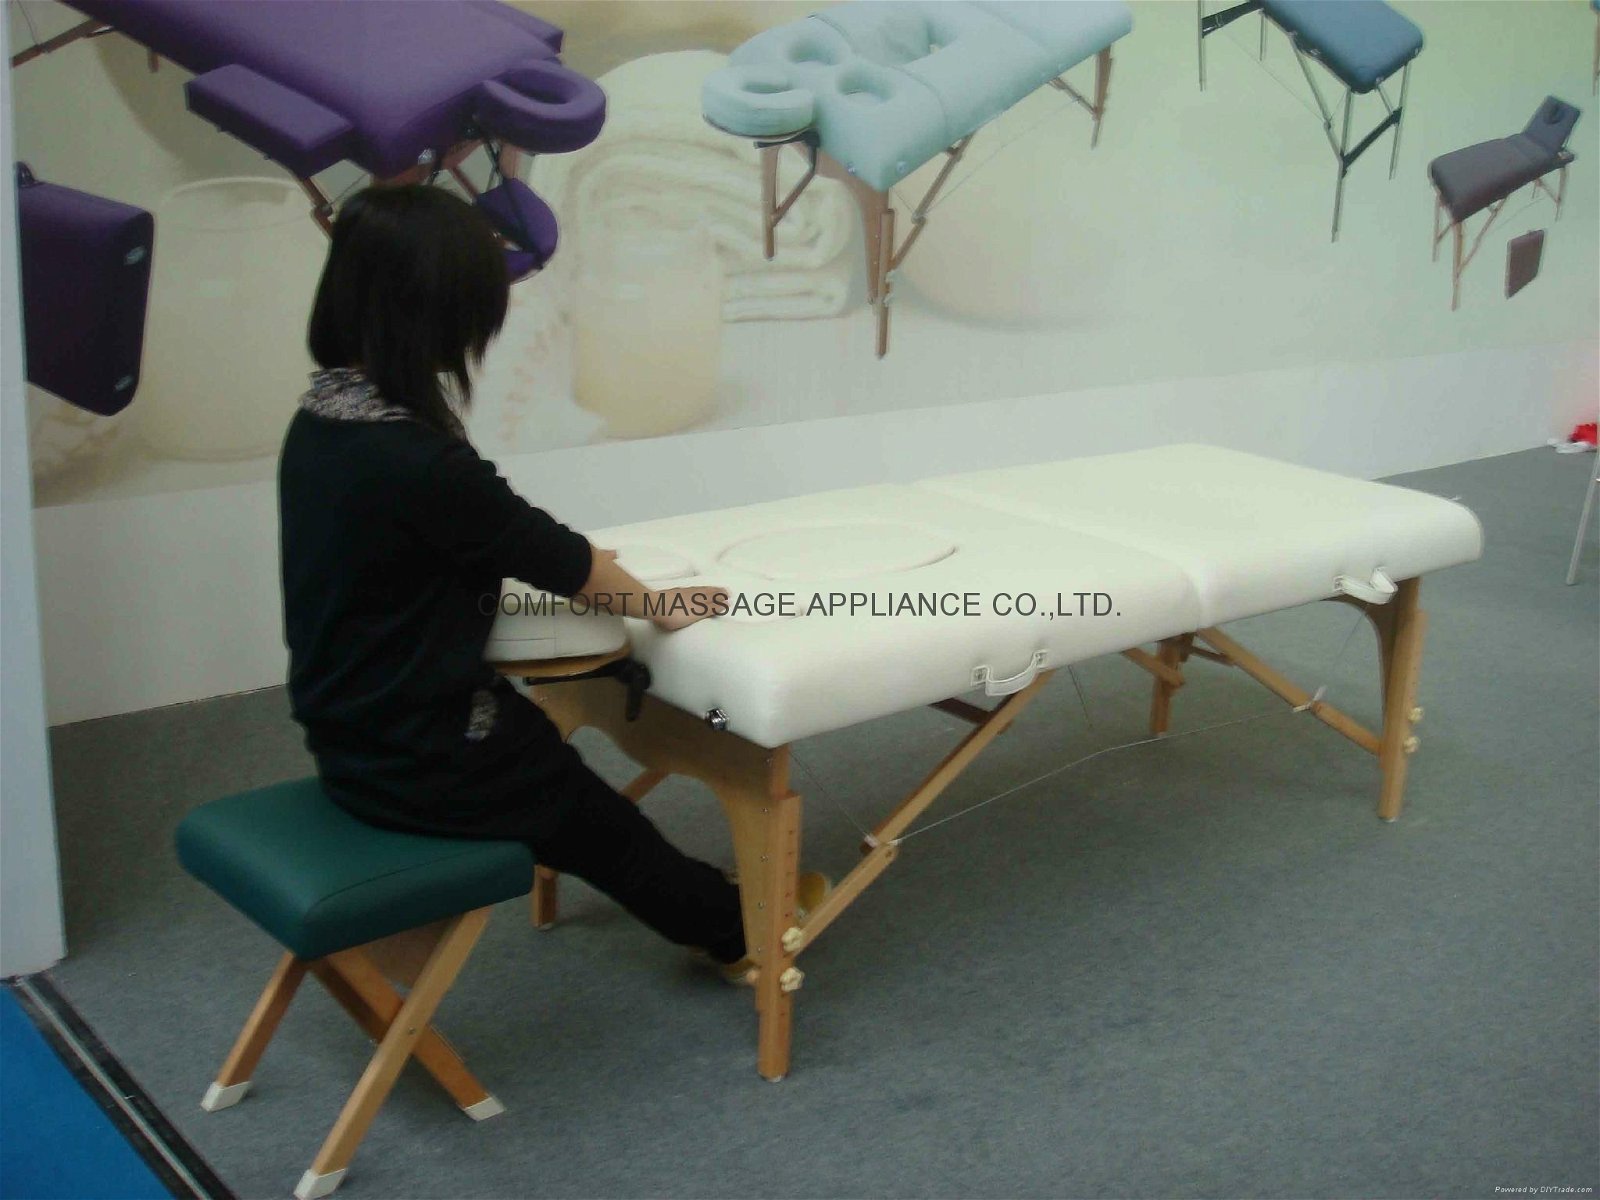 PW-002 portable pregnant massage table 4